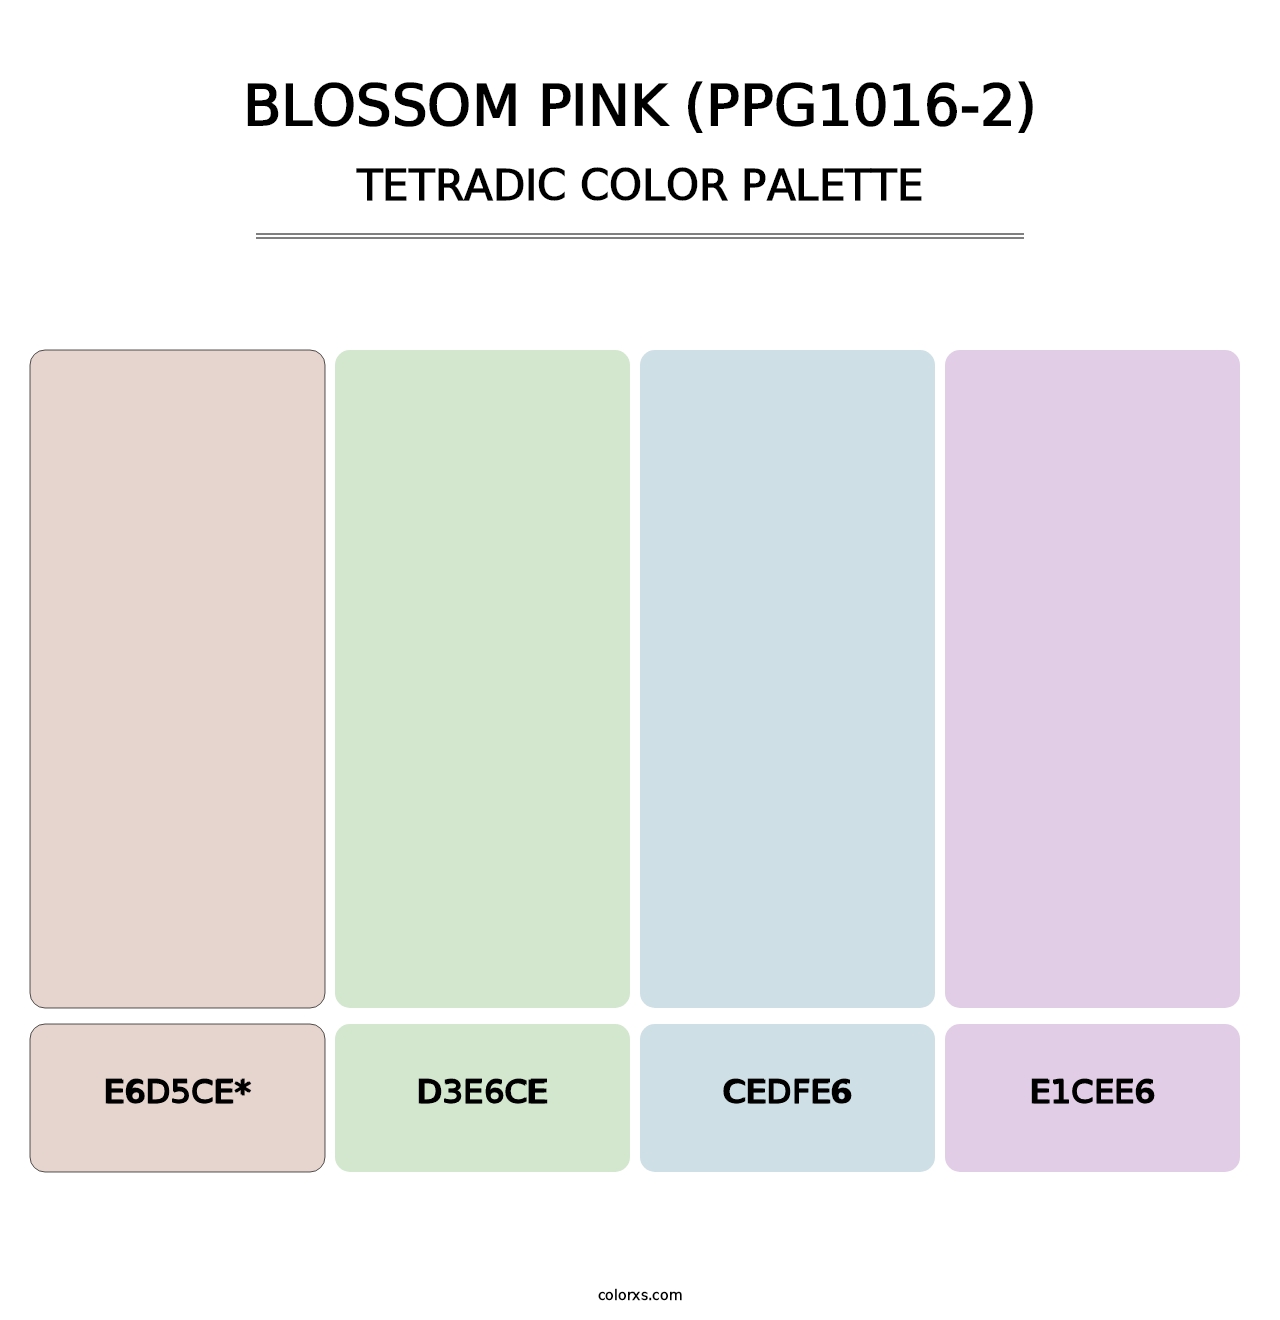 Blossom Pink (PPG1016-2) - Tetradic Color Palette